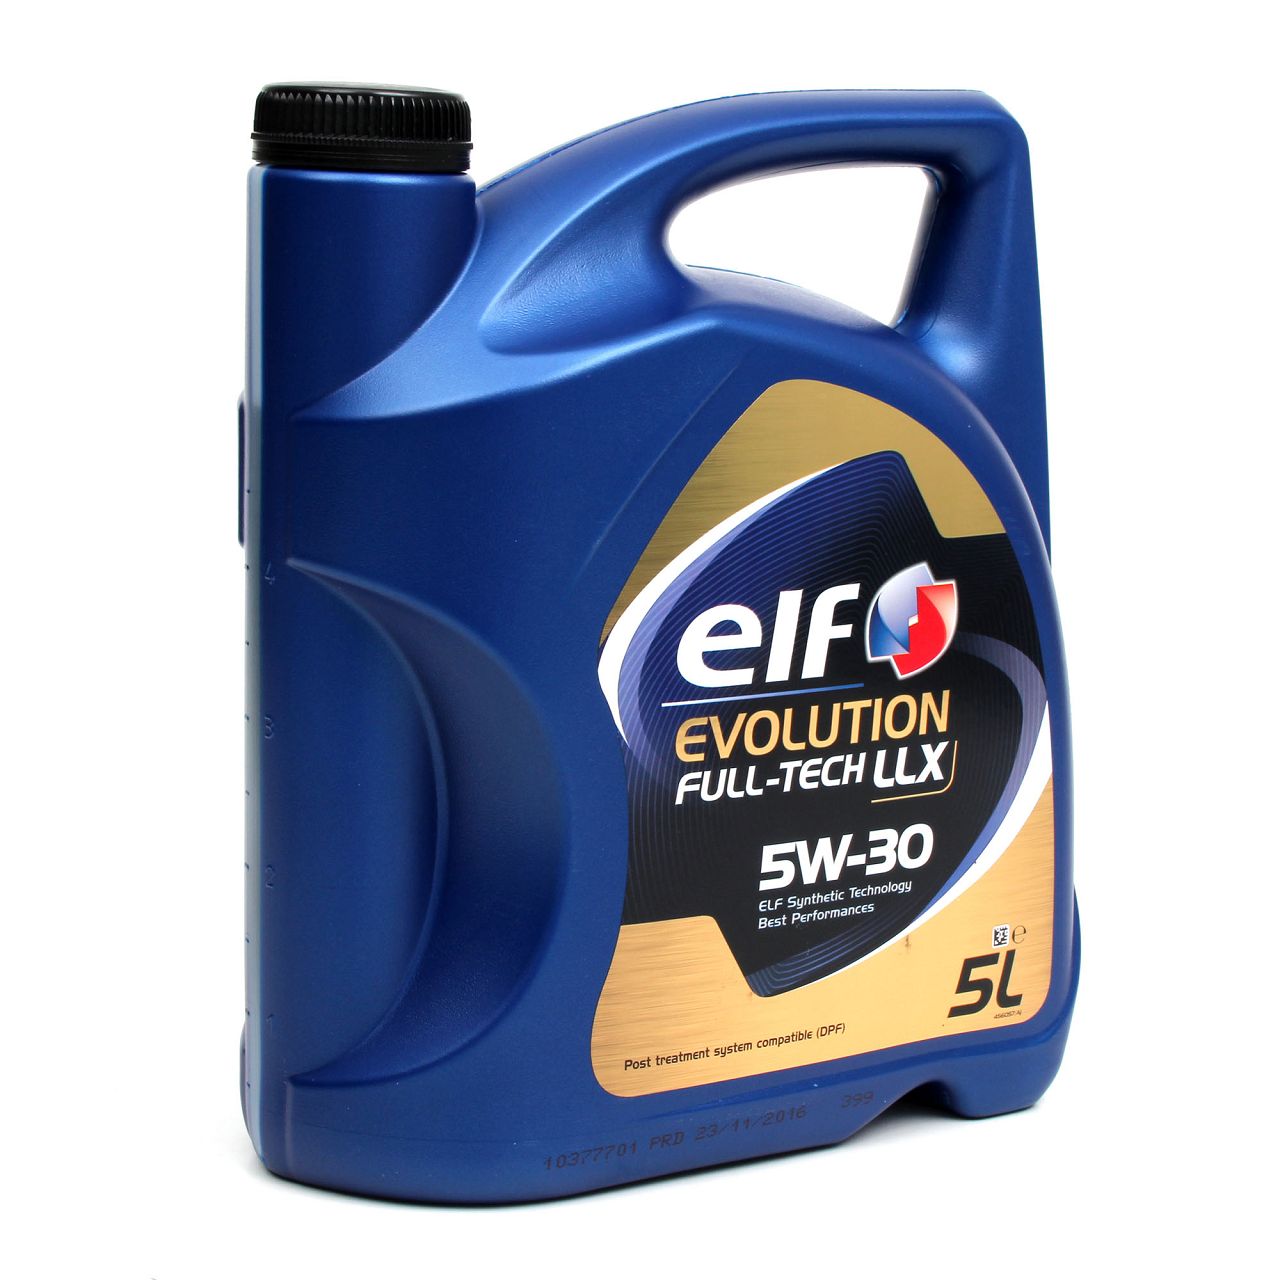 elf Evolution Full-Tech LLX 5W-30 Motoröl 5 Liter + ORIGINAL Ölfilter 8200768927